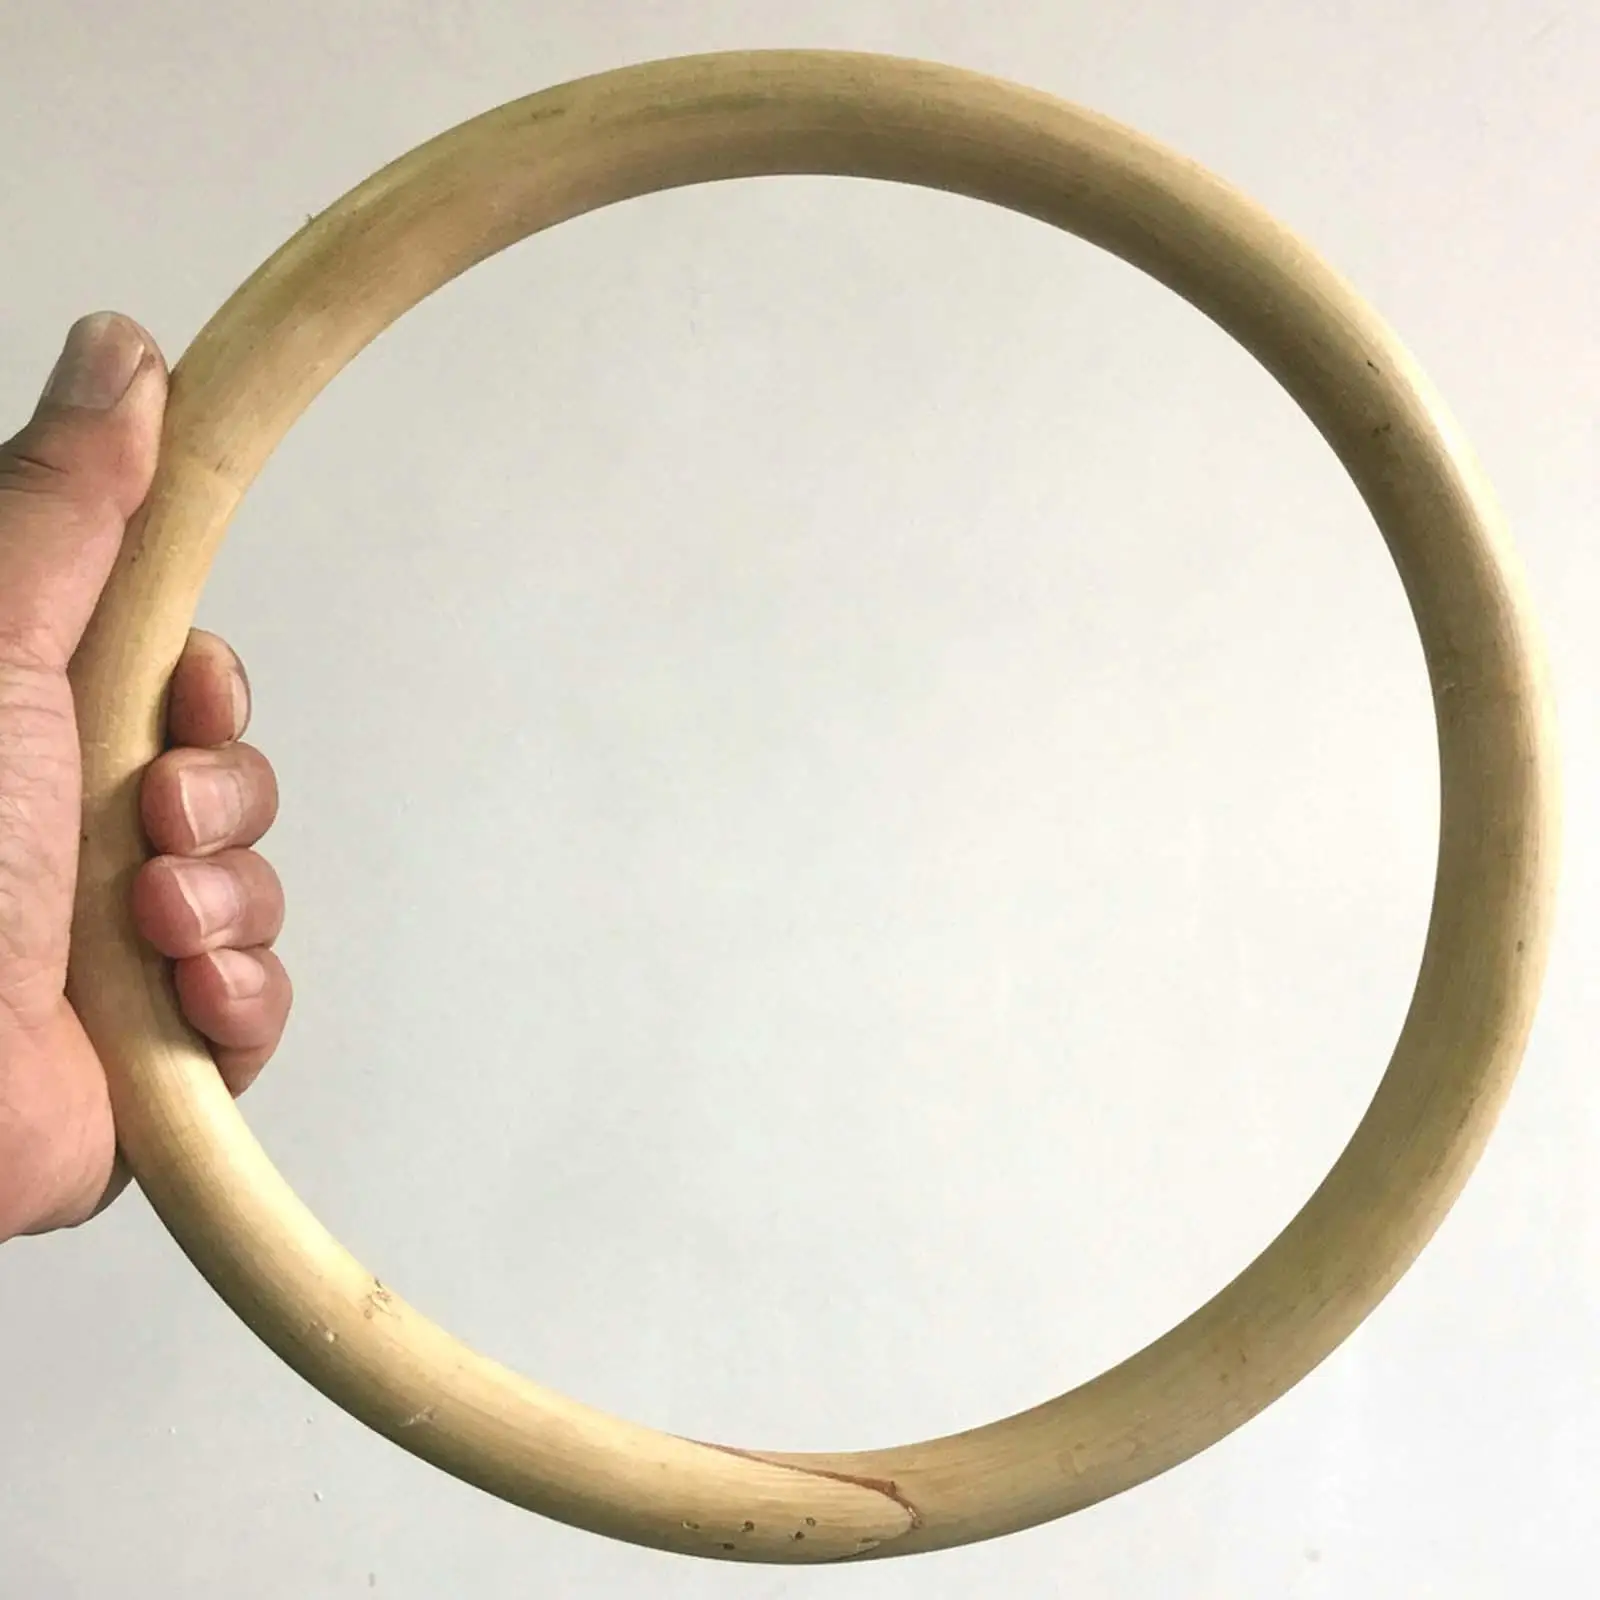  Rattan Ring Siu Lum Rings Wrist Hand Strength Training Equipment Sau Sticky Rattan Ring Rings Training Ring